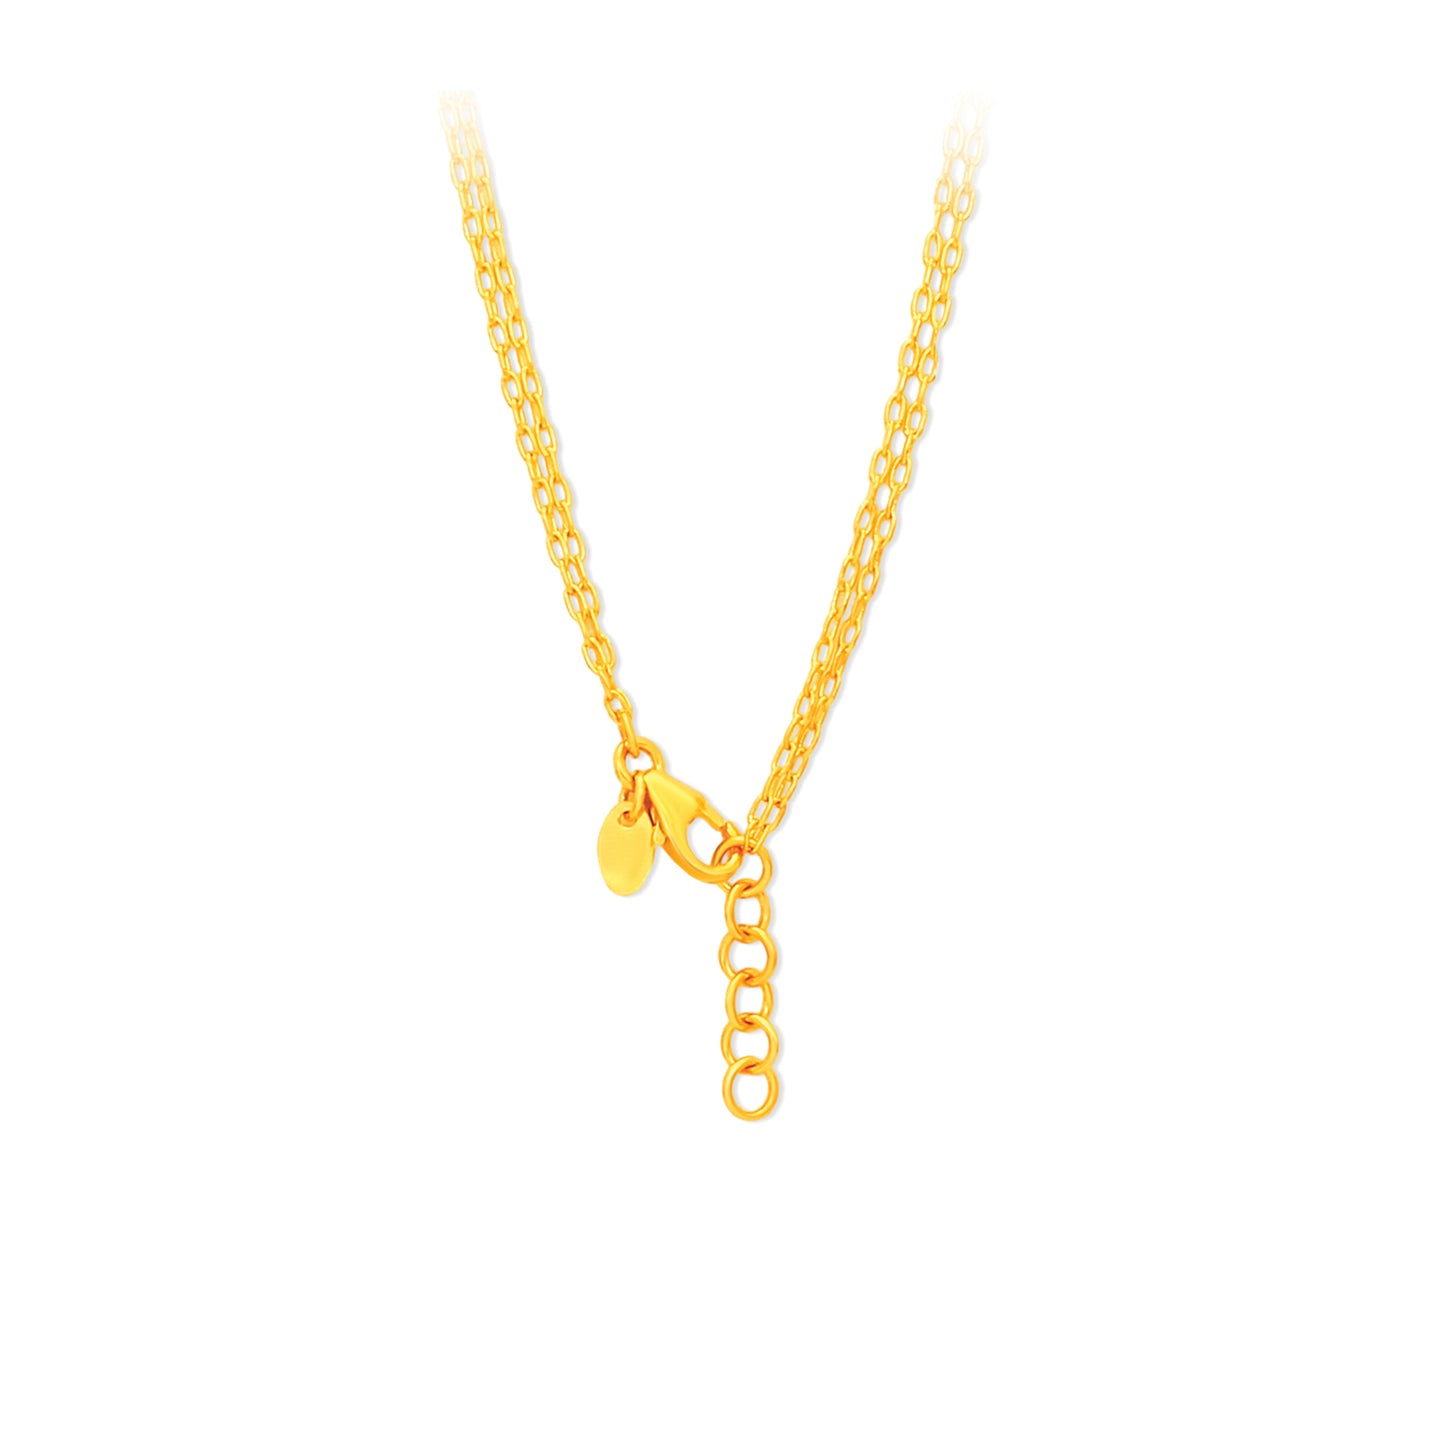 TAKA Jewellery 916 Gold Necklace